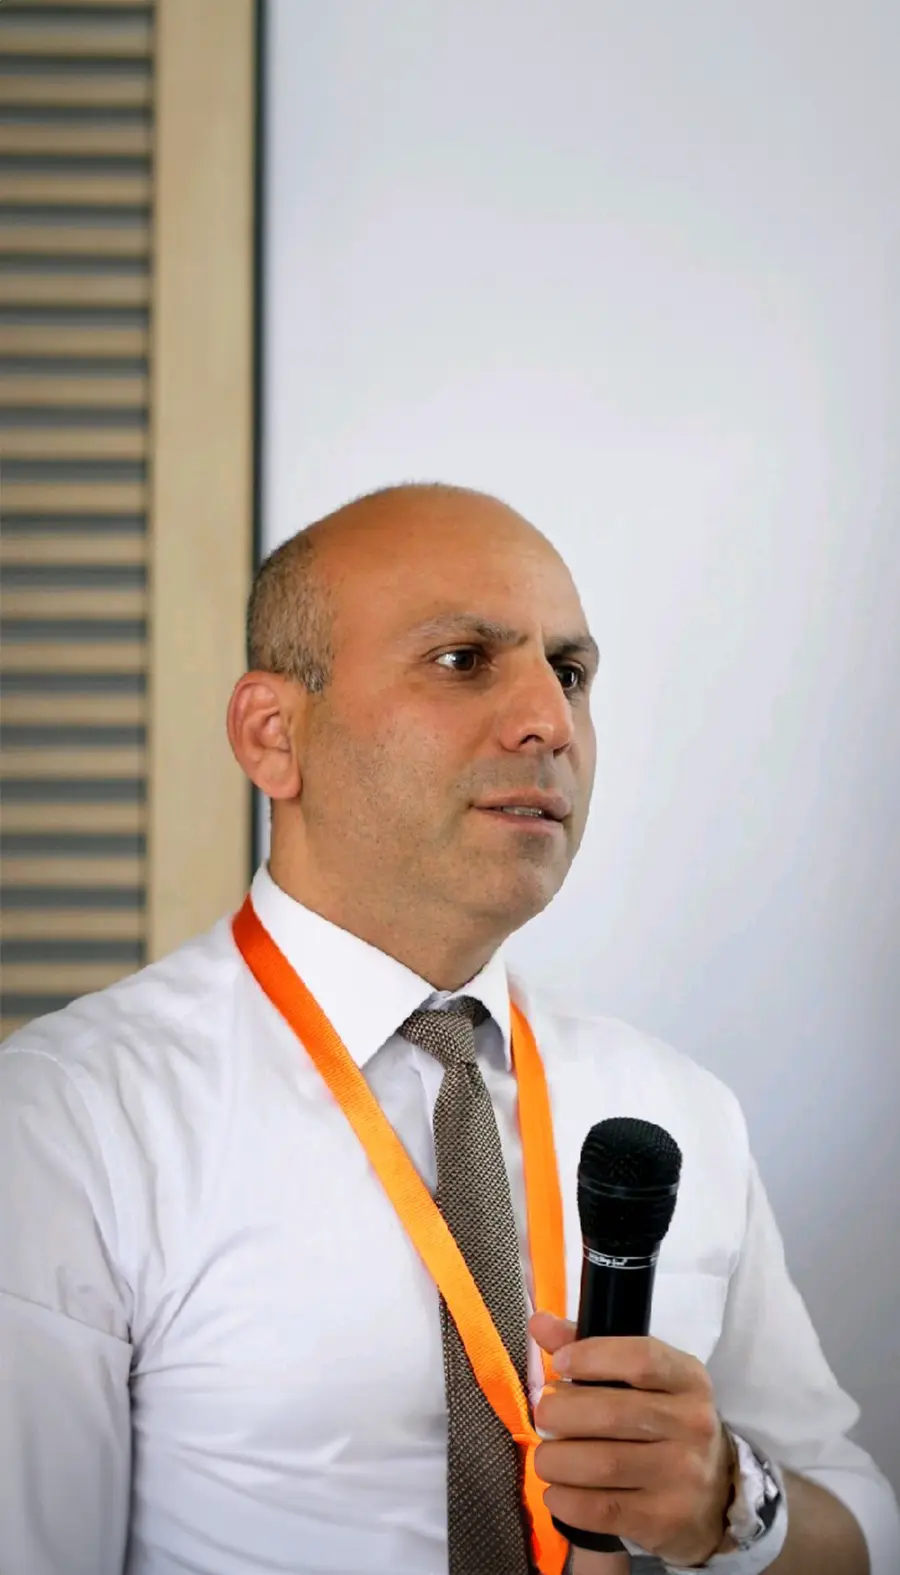 Prof. Farzad Rahimian, Chair of International Scientific Committee